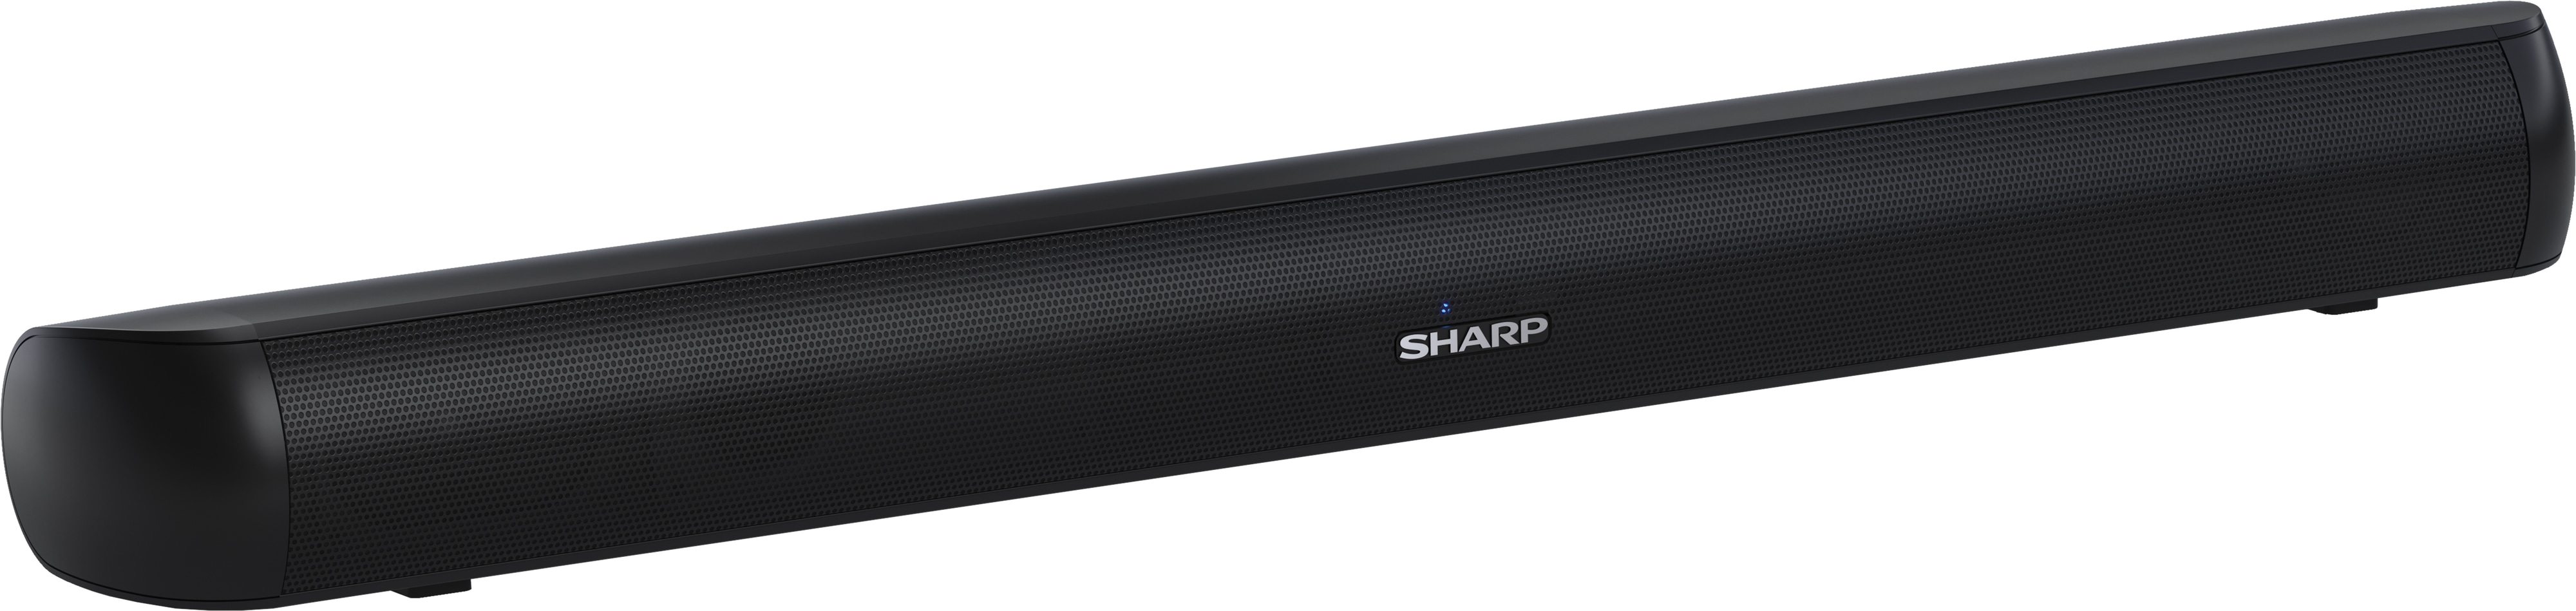 SHARP Soundbar HT-SB107, schwarz, Bluetooth, HDMI, USB, 90 W